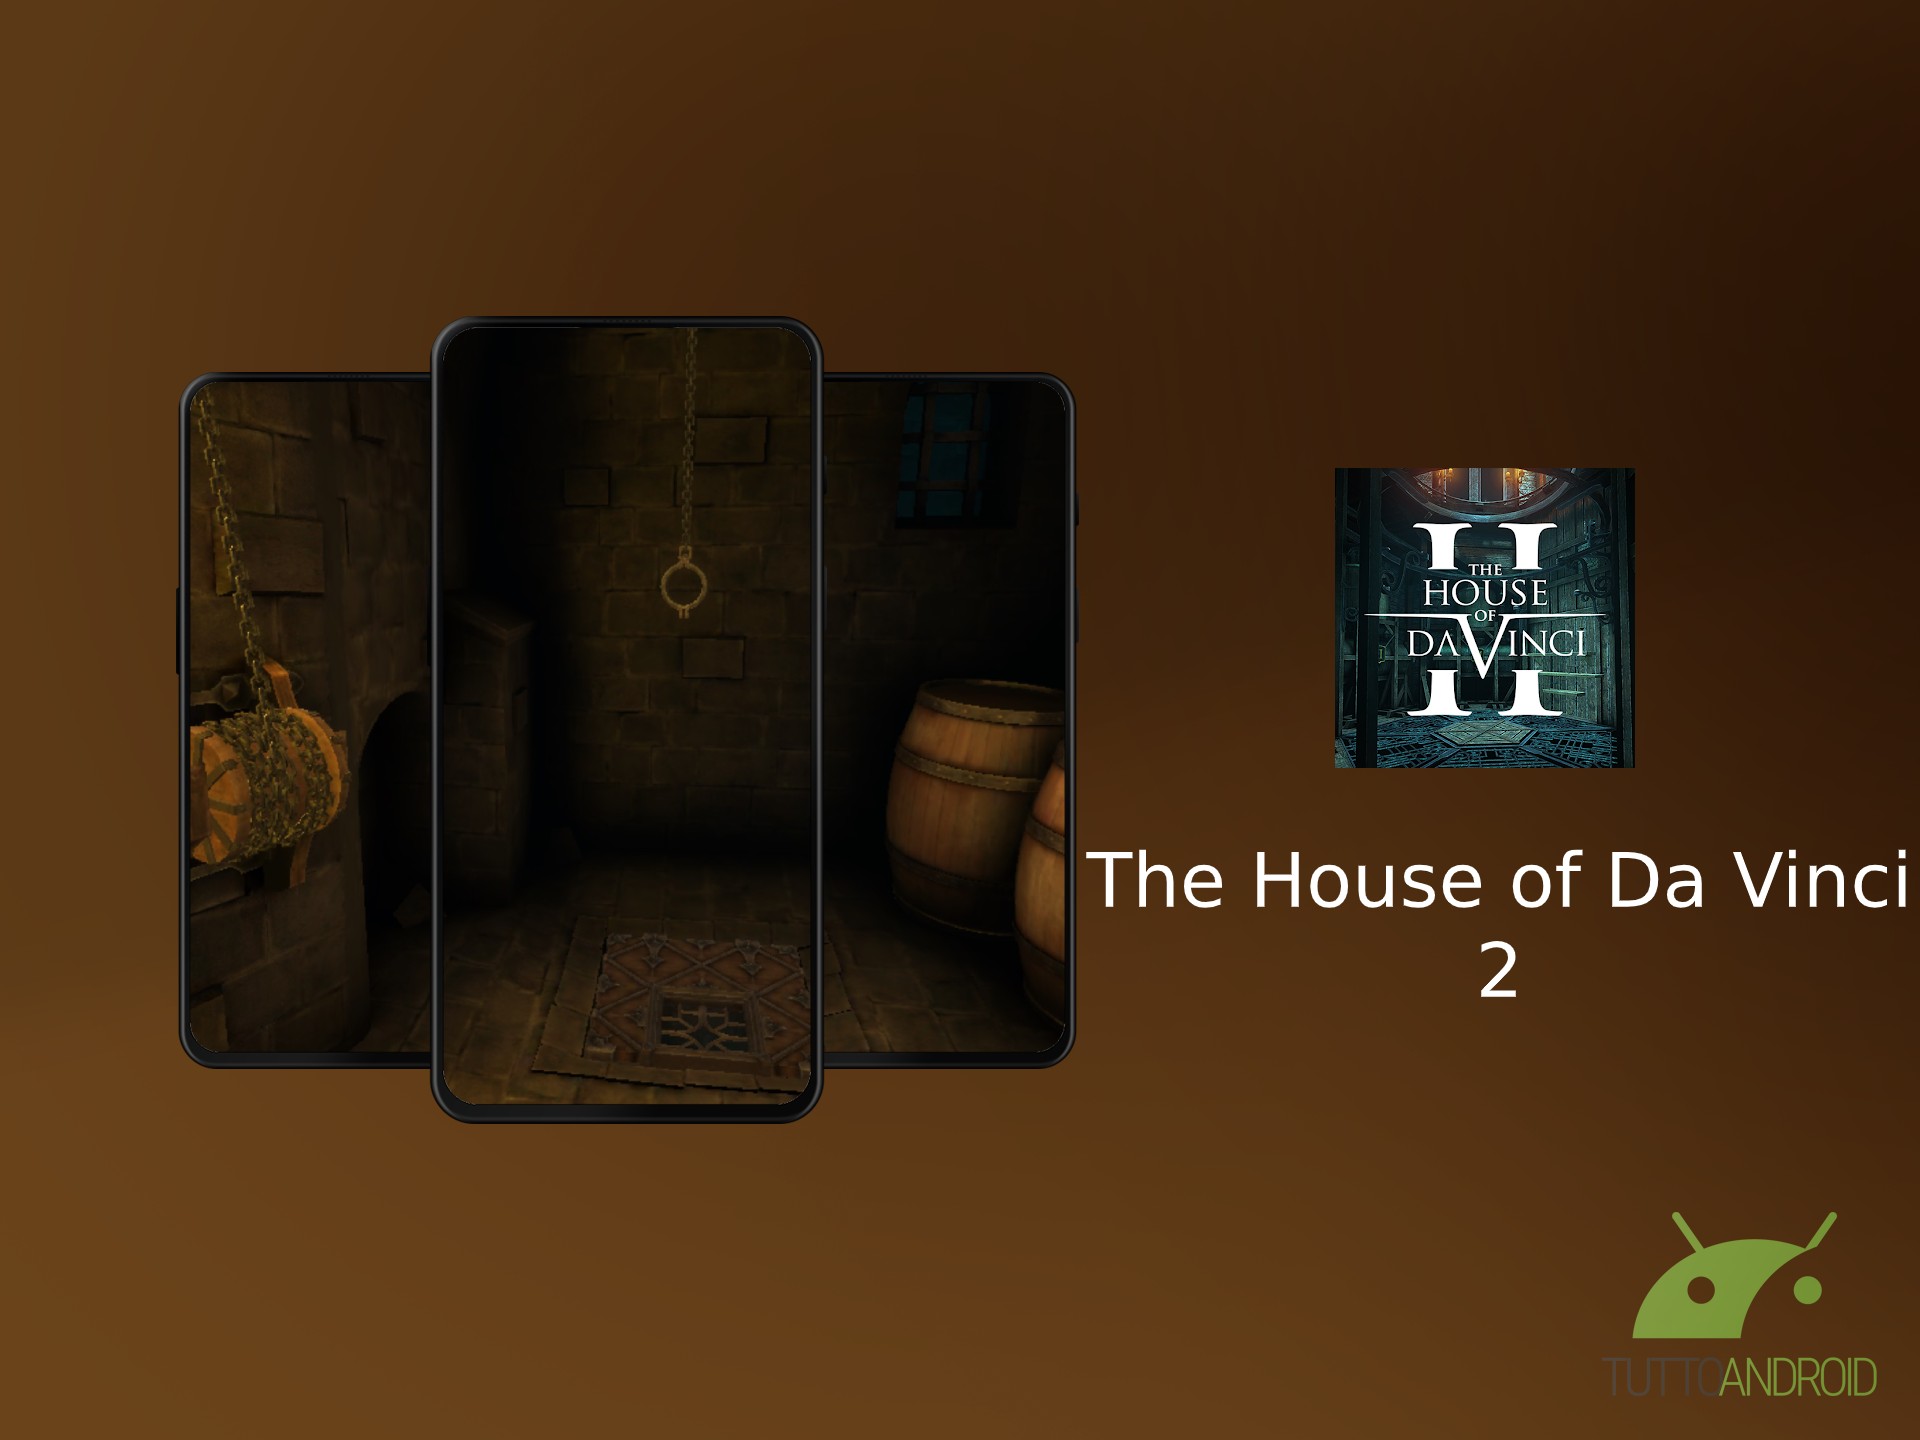 free download the house of da vinci games